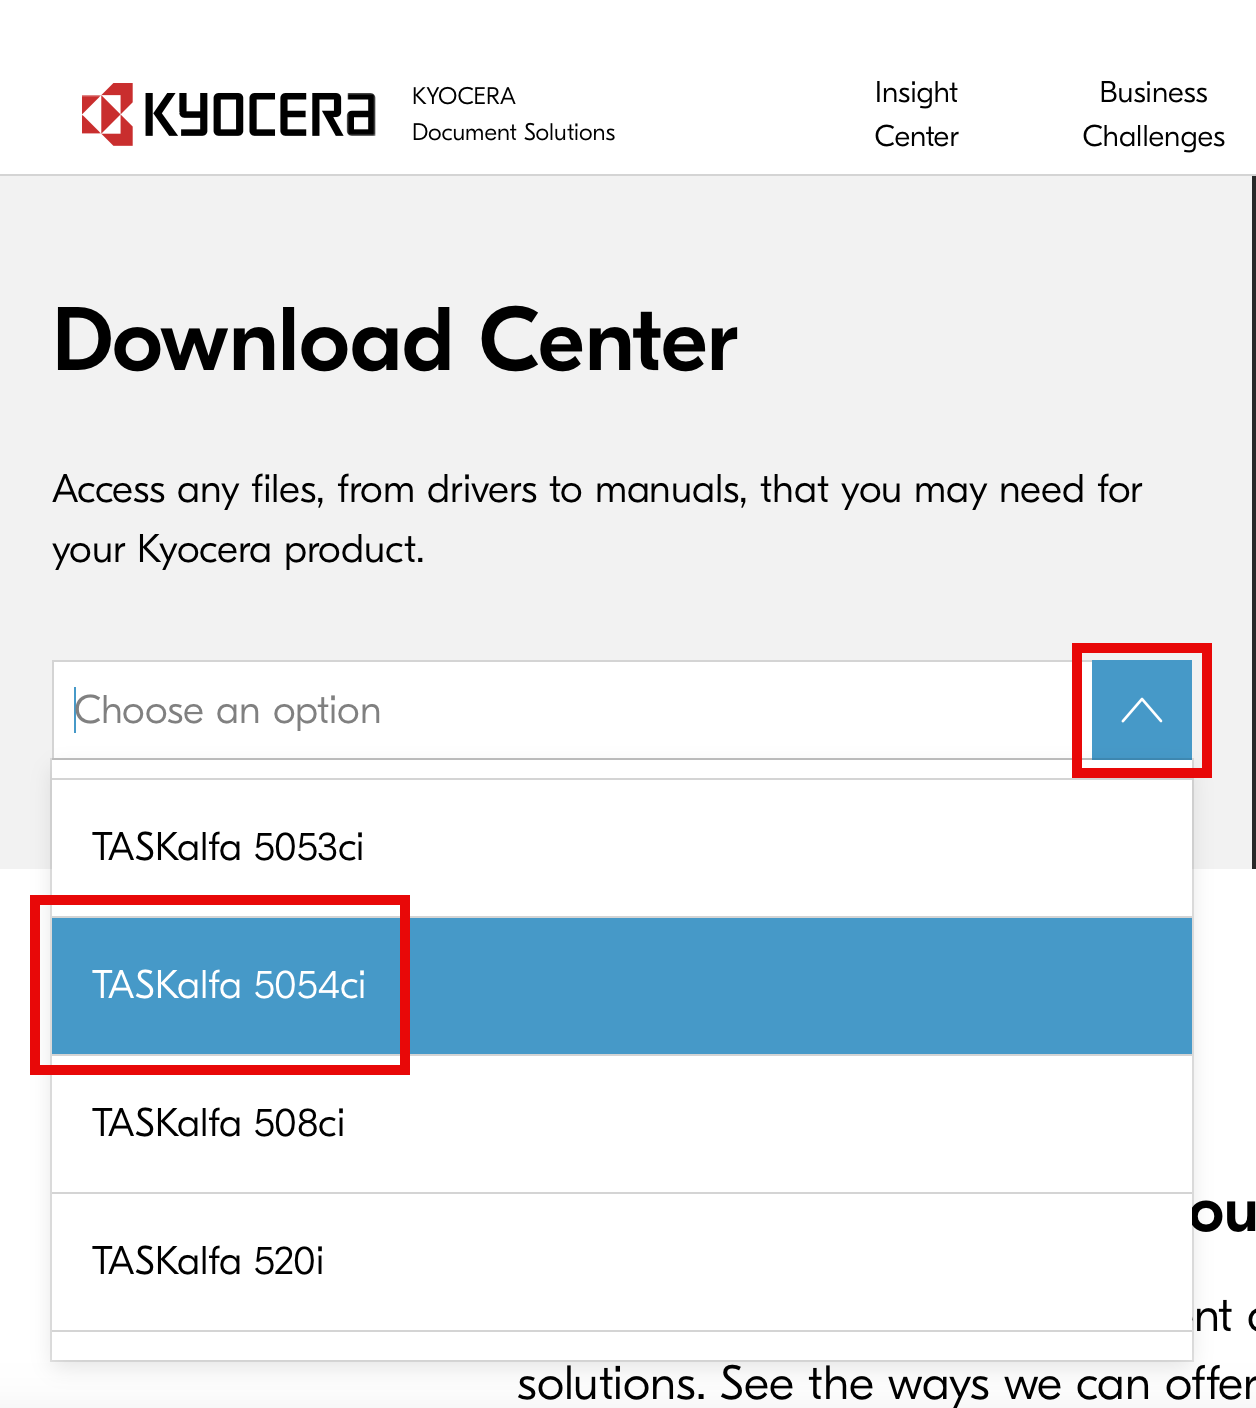 Kyocera Download Center product selection menu.